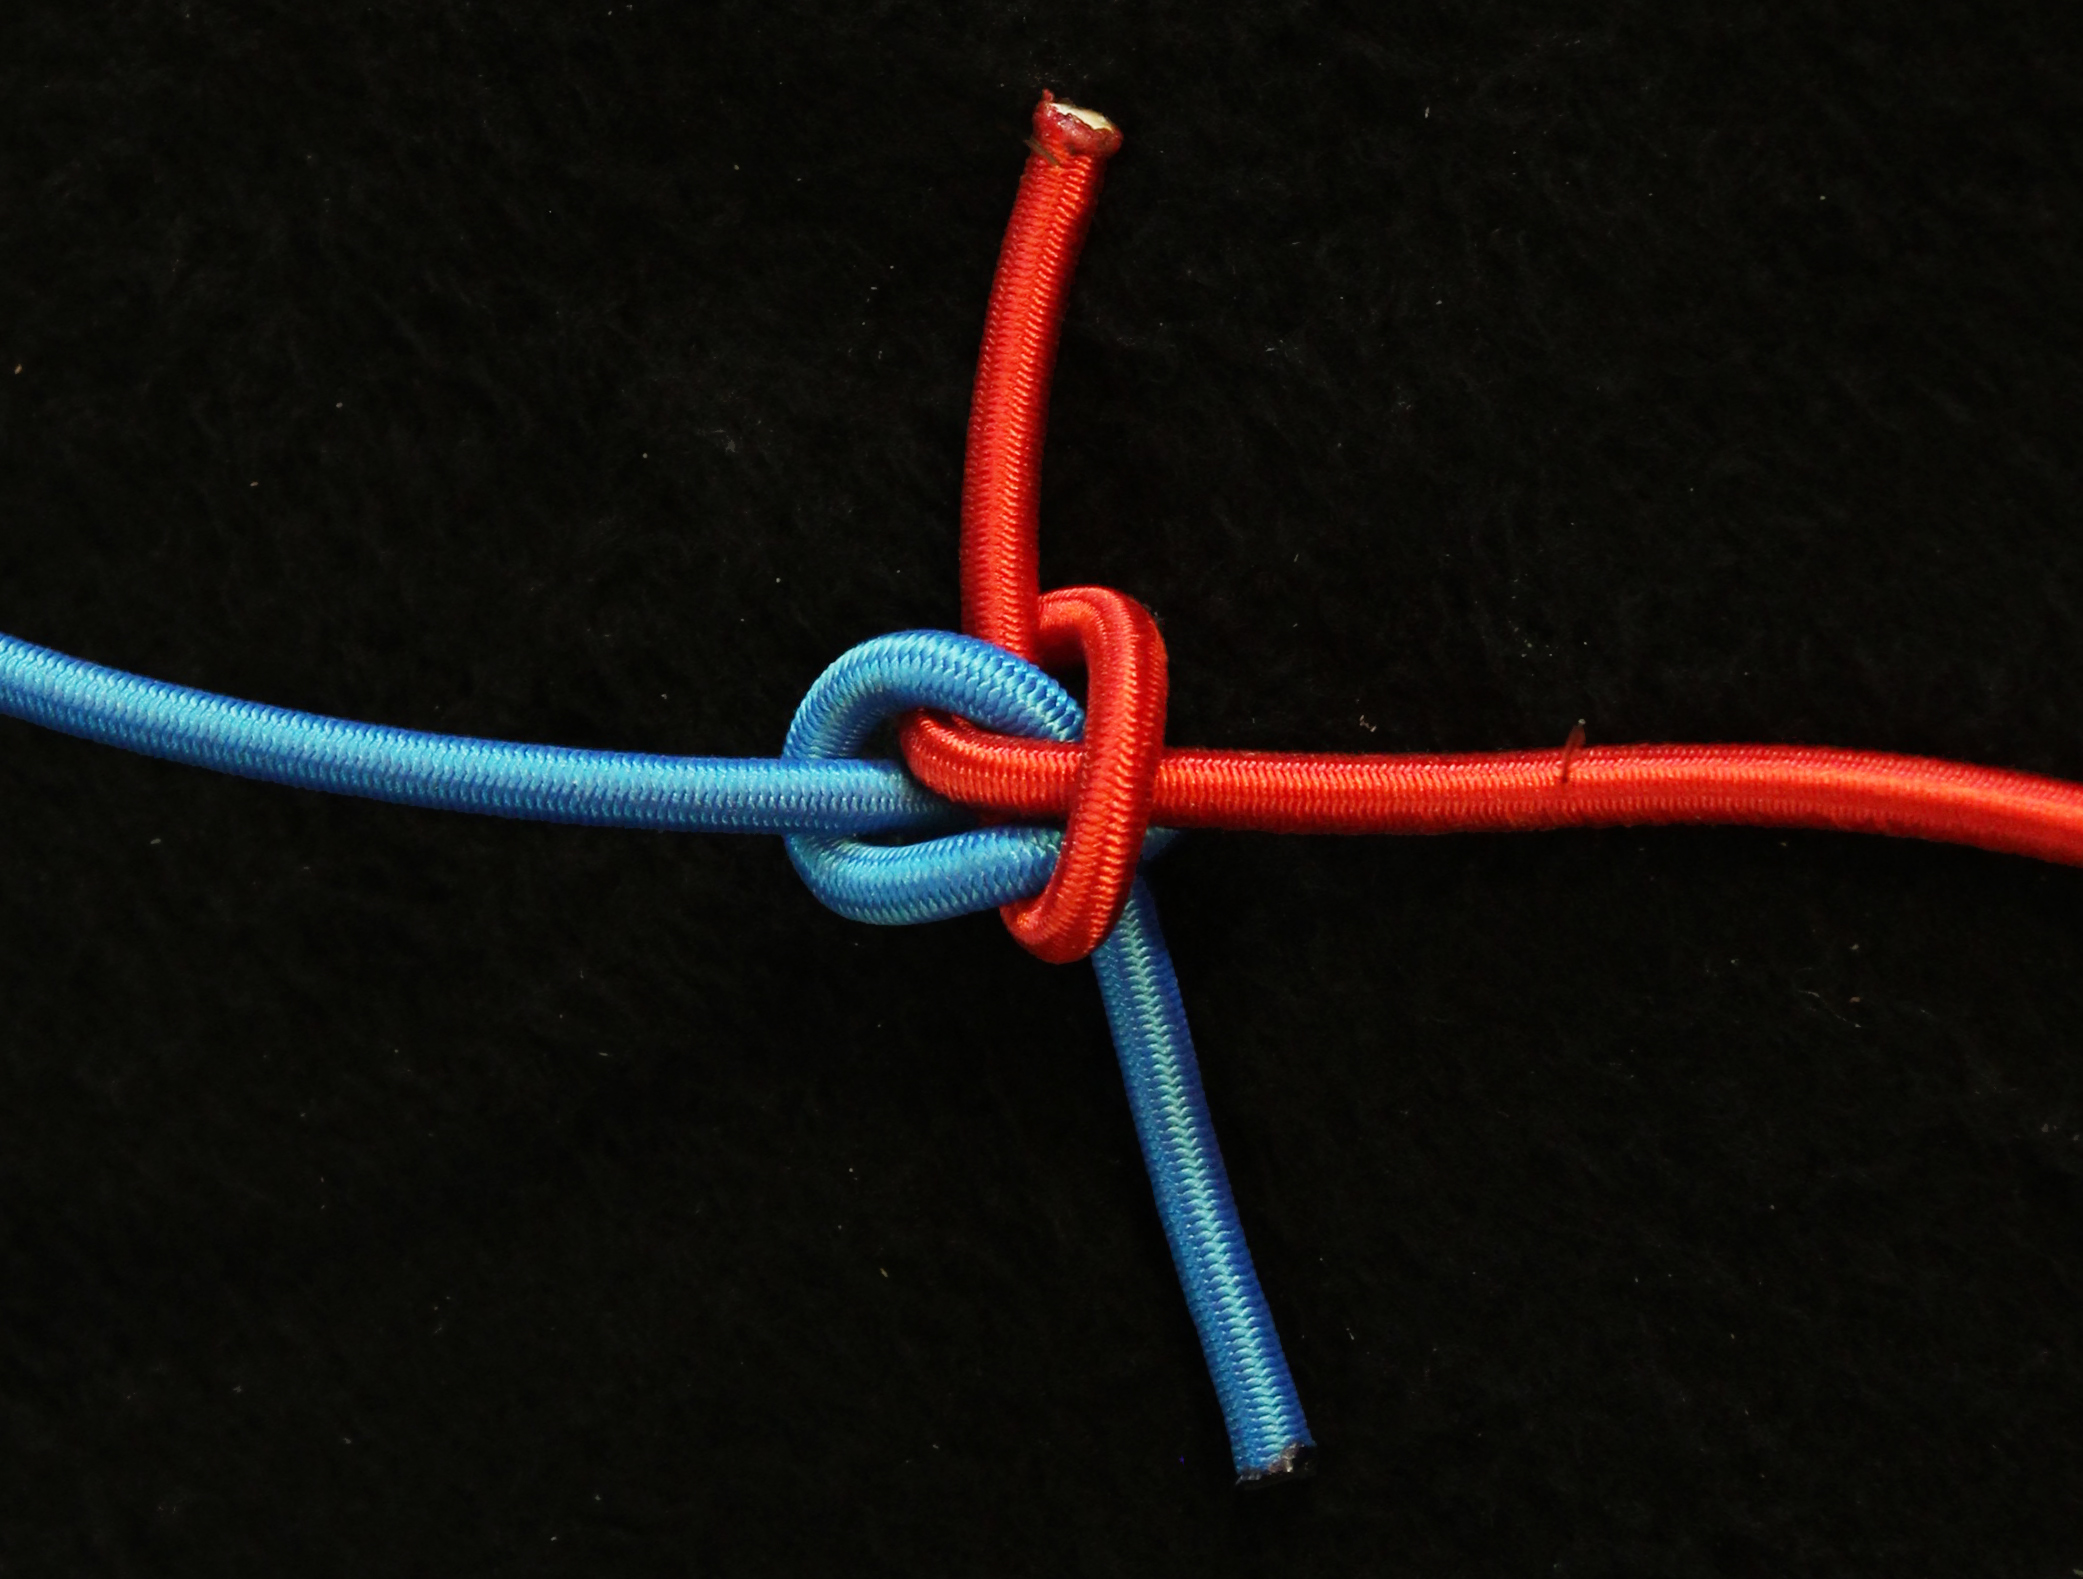 knotting elastic cord